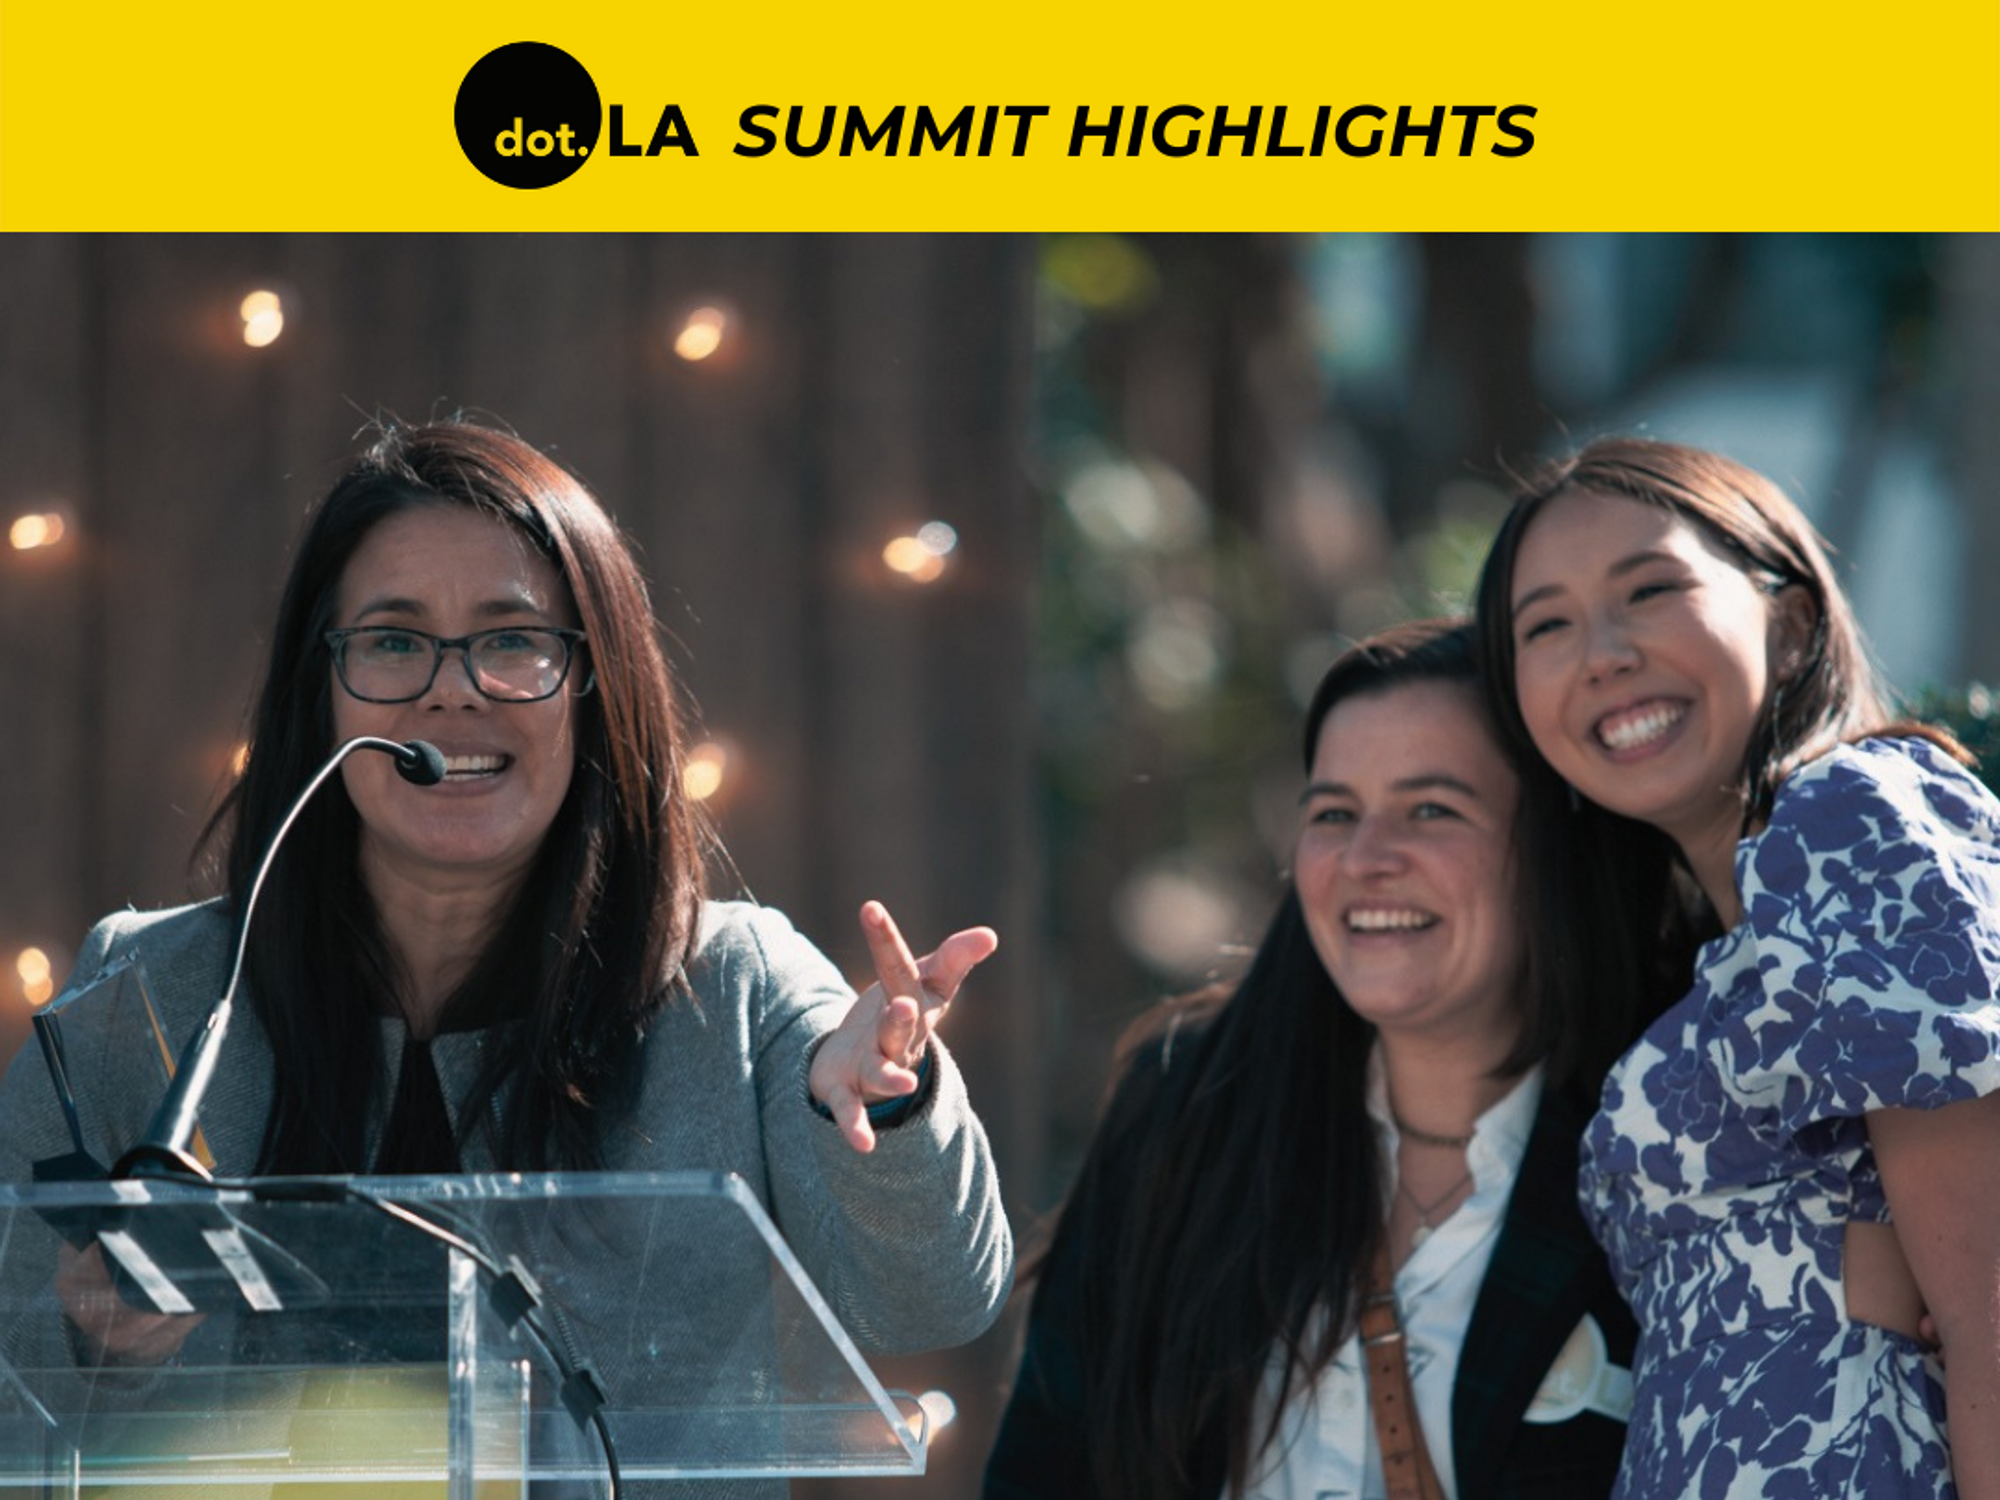 dot.LA Summit: Grid110 Wins Social Justice Award